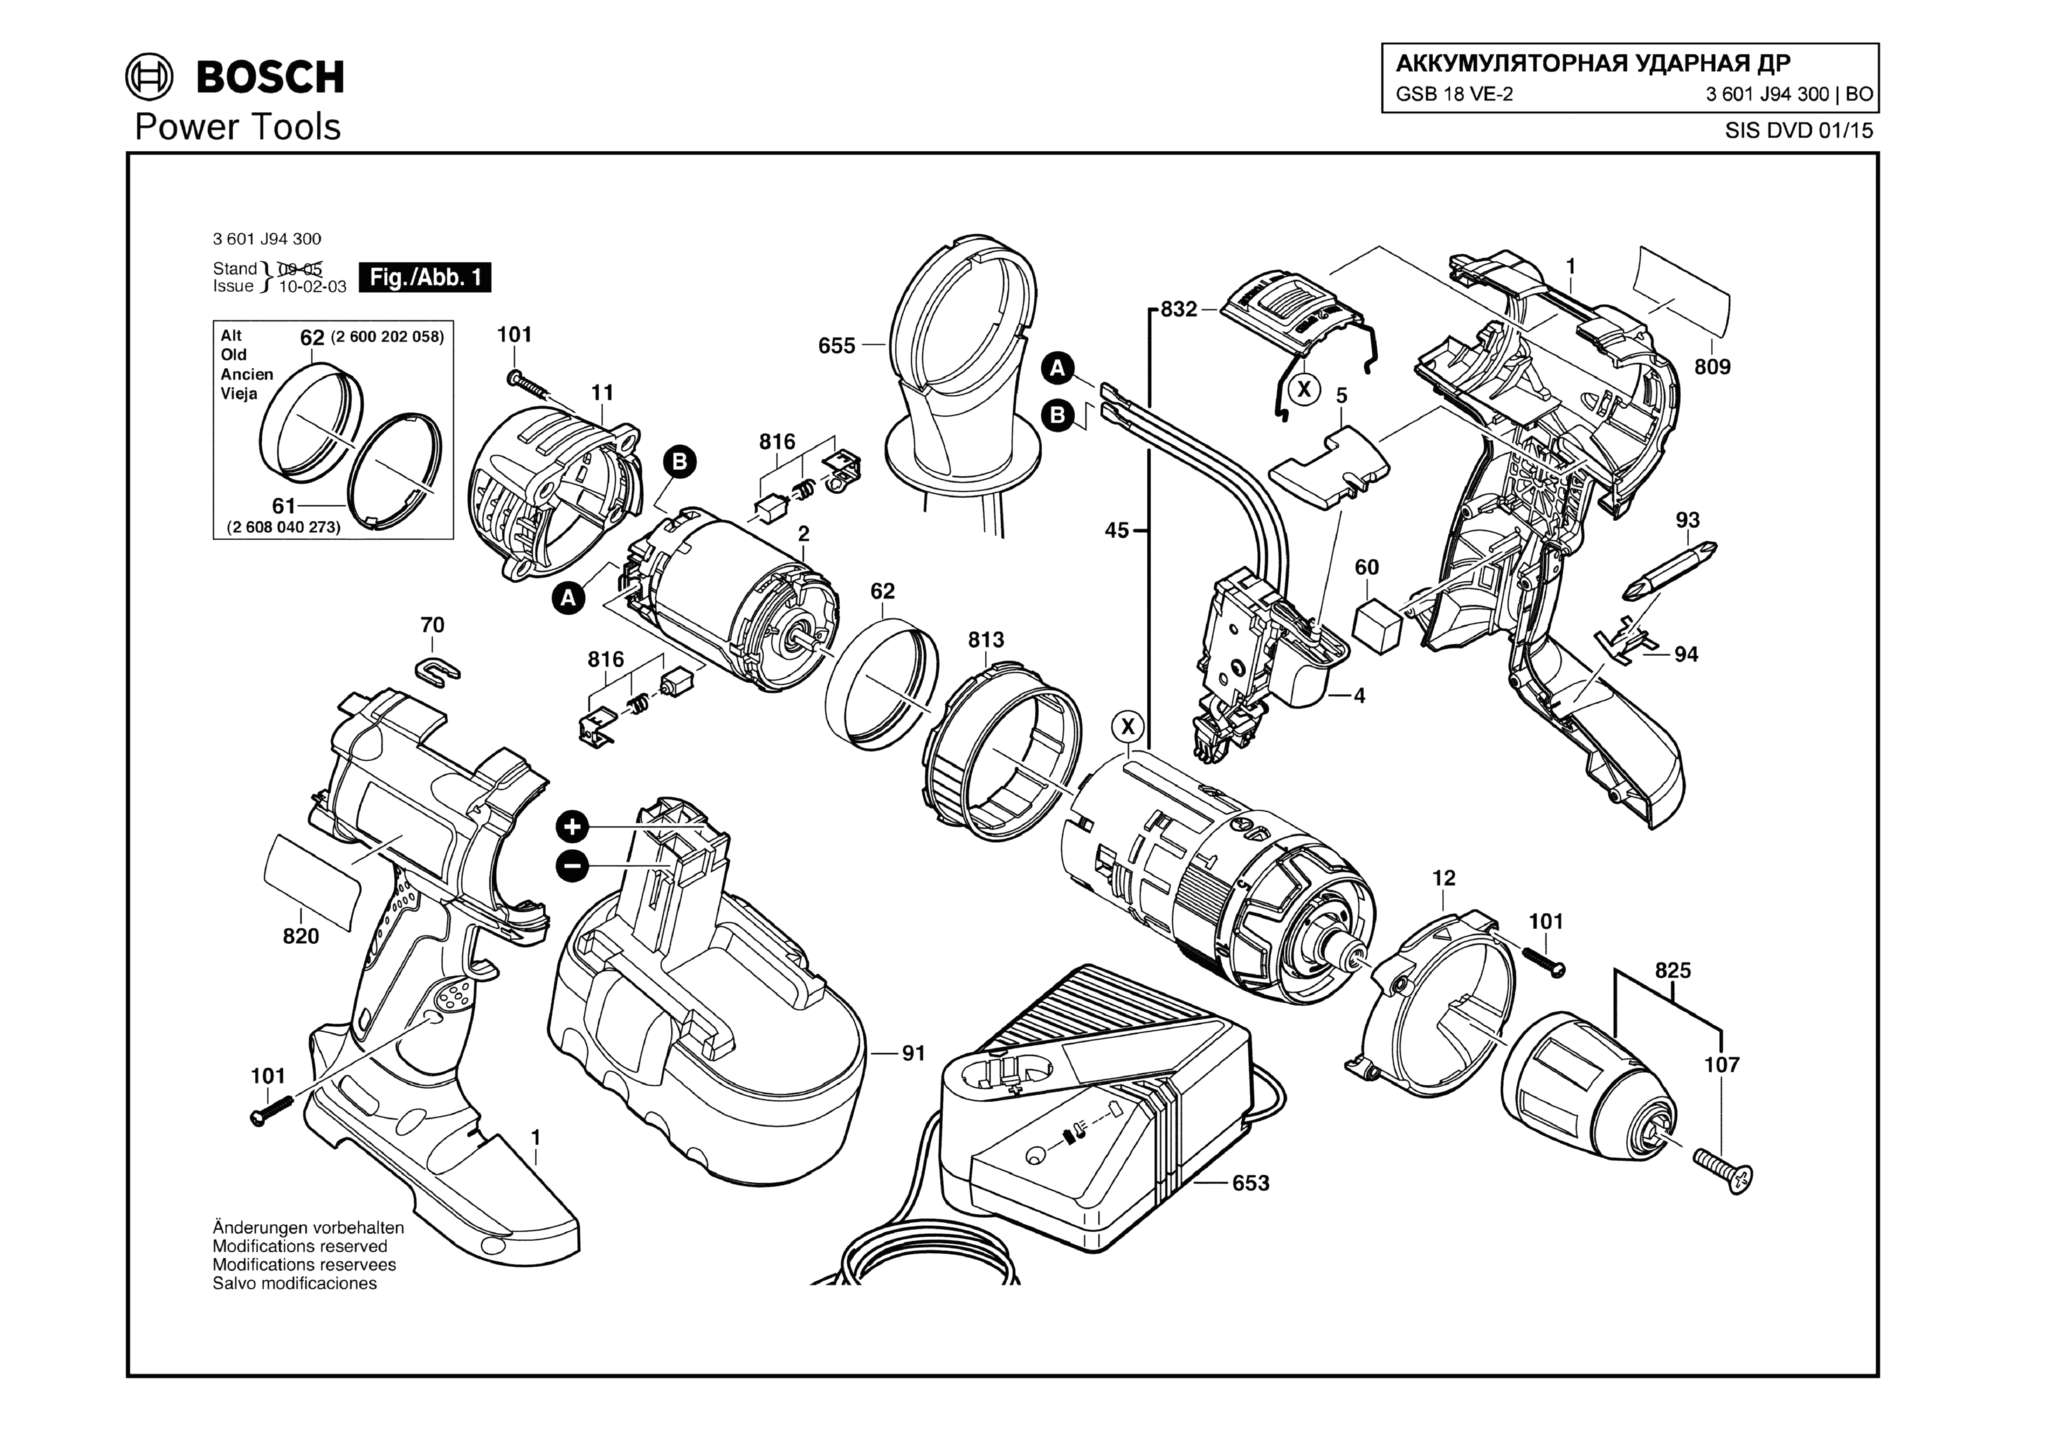 Запчасти, схема и деталировка Bosch GSB 18 VE-2 (ТИП 3601J94300)